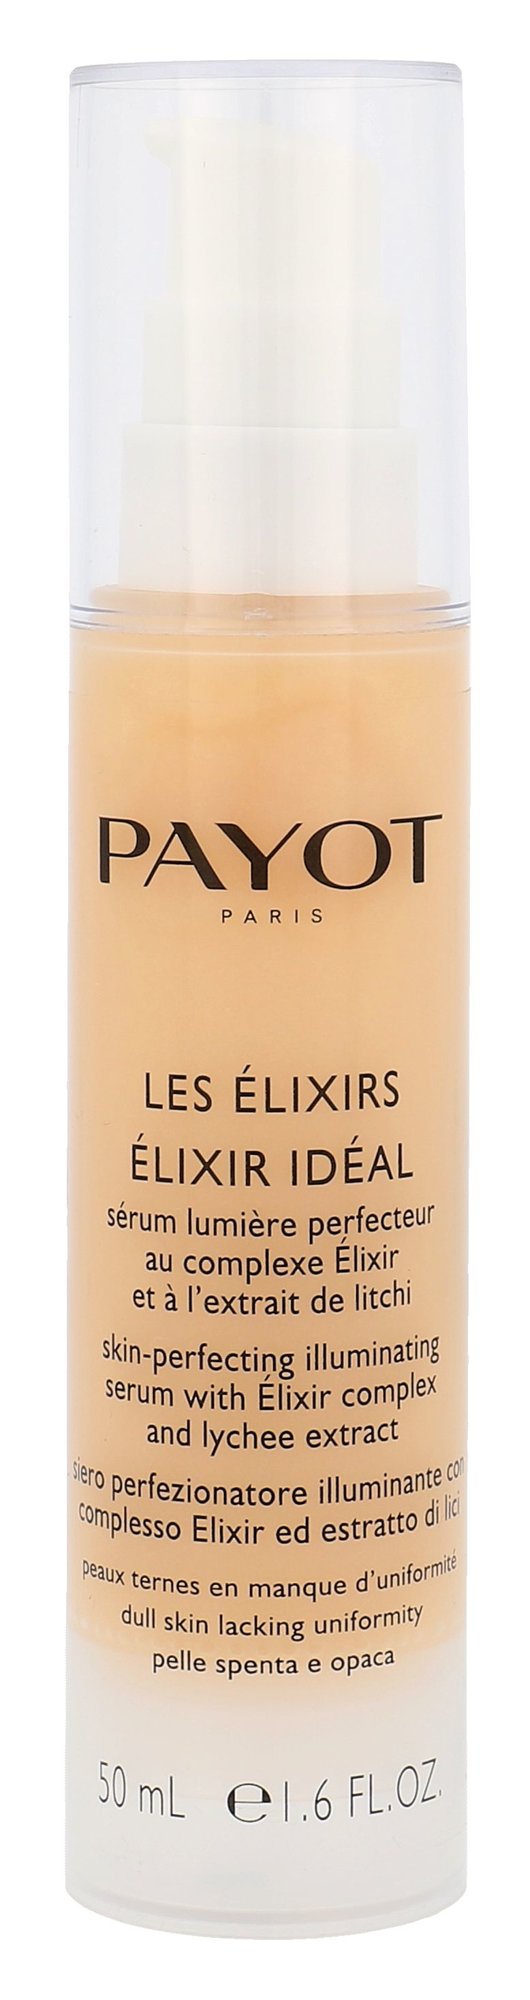 Payot Elixir Ideal Skin-Perfecting Illuminating Serum